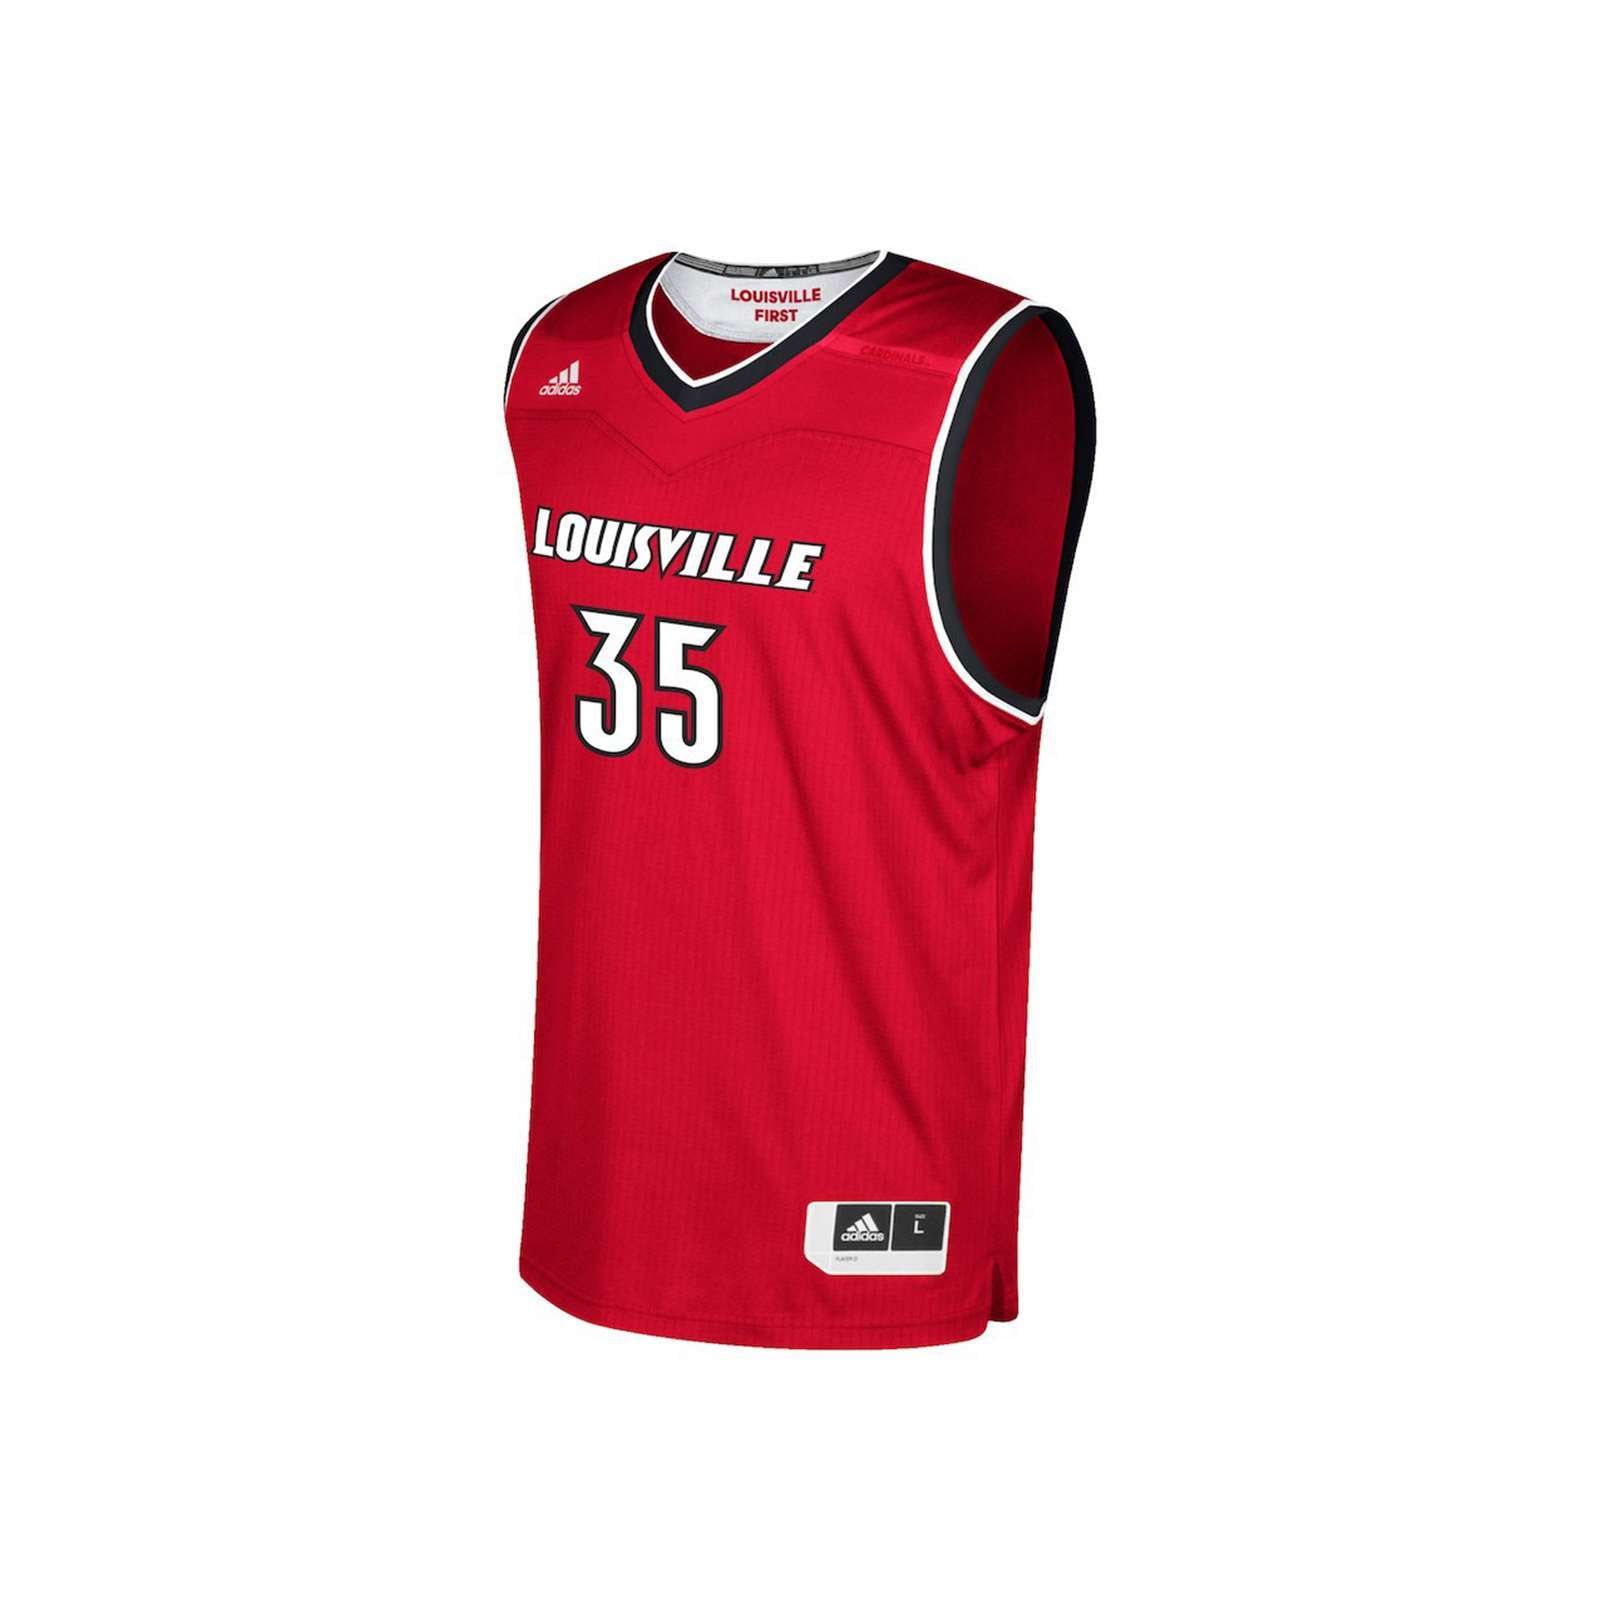 Adidas Men Ncaa Louisville Replica Basketball Jersey